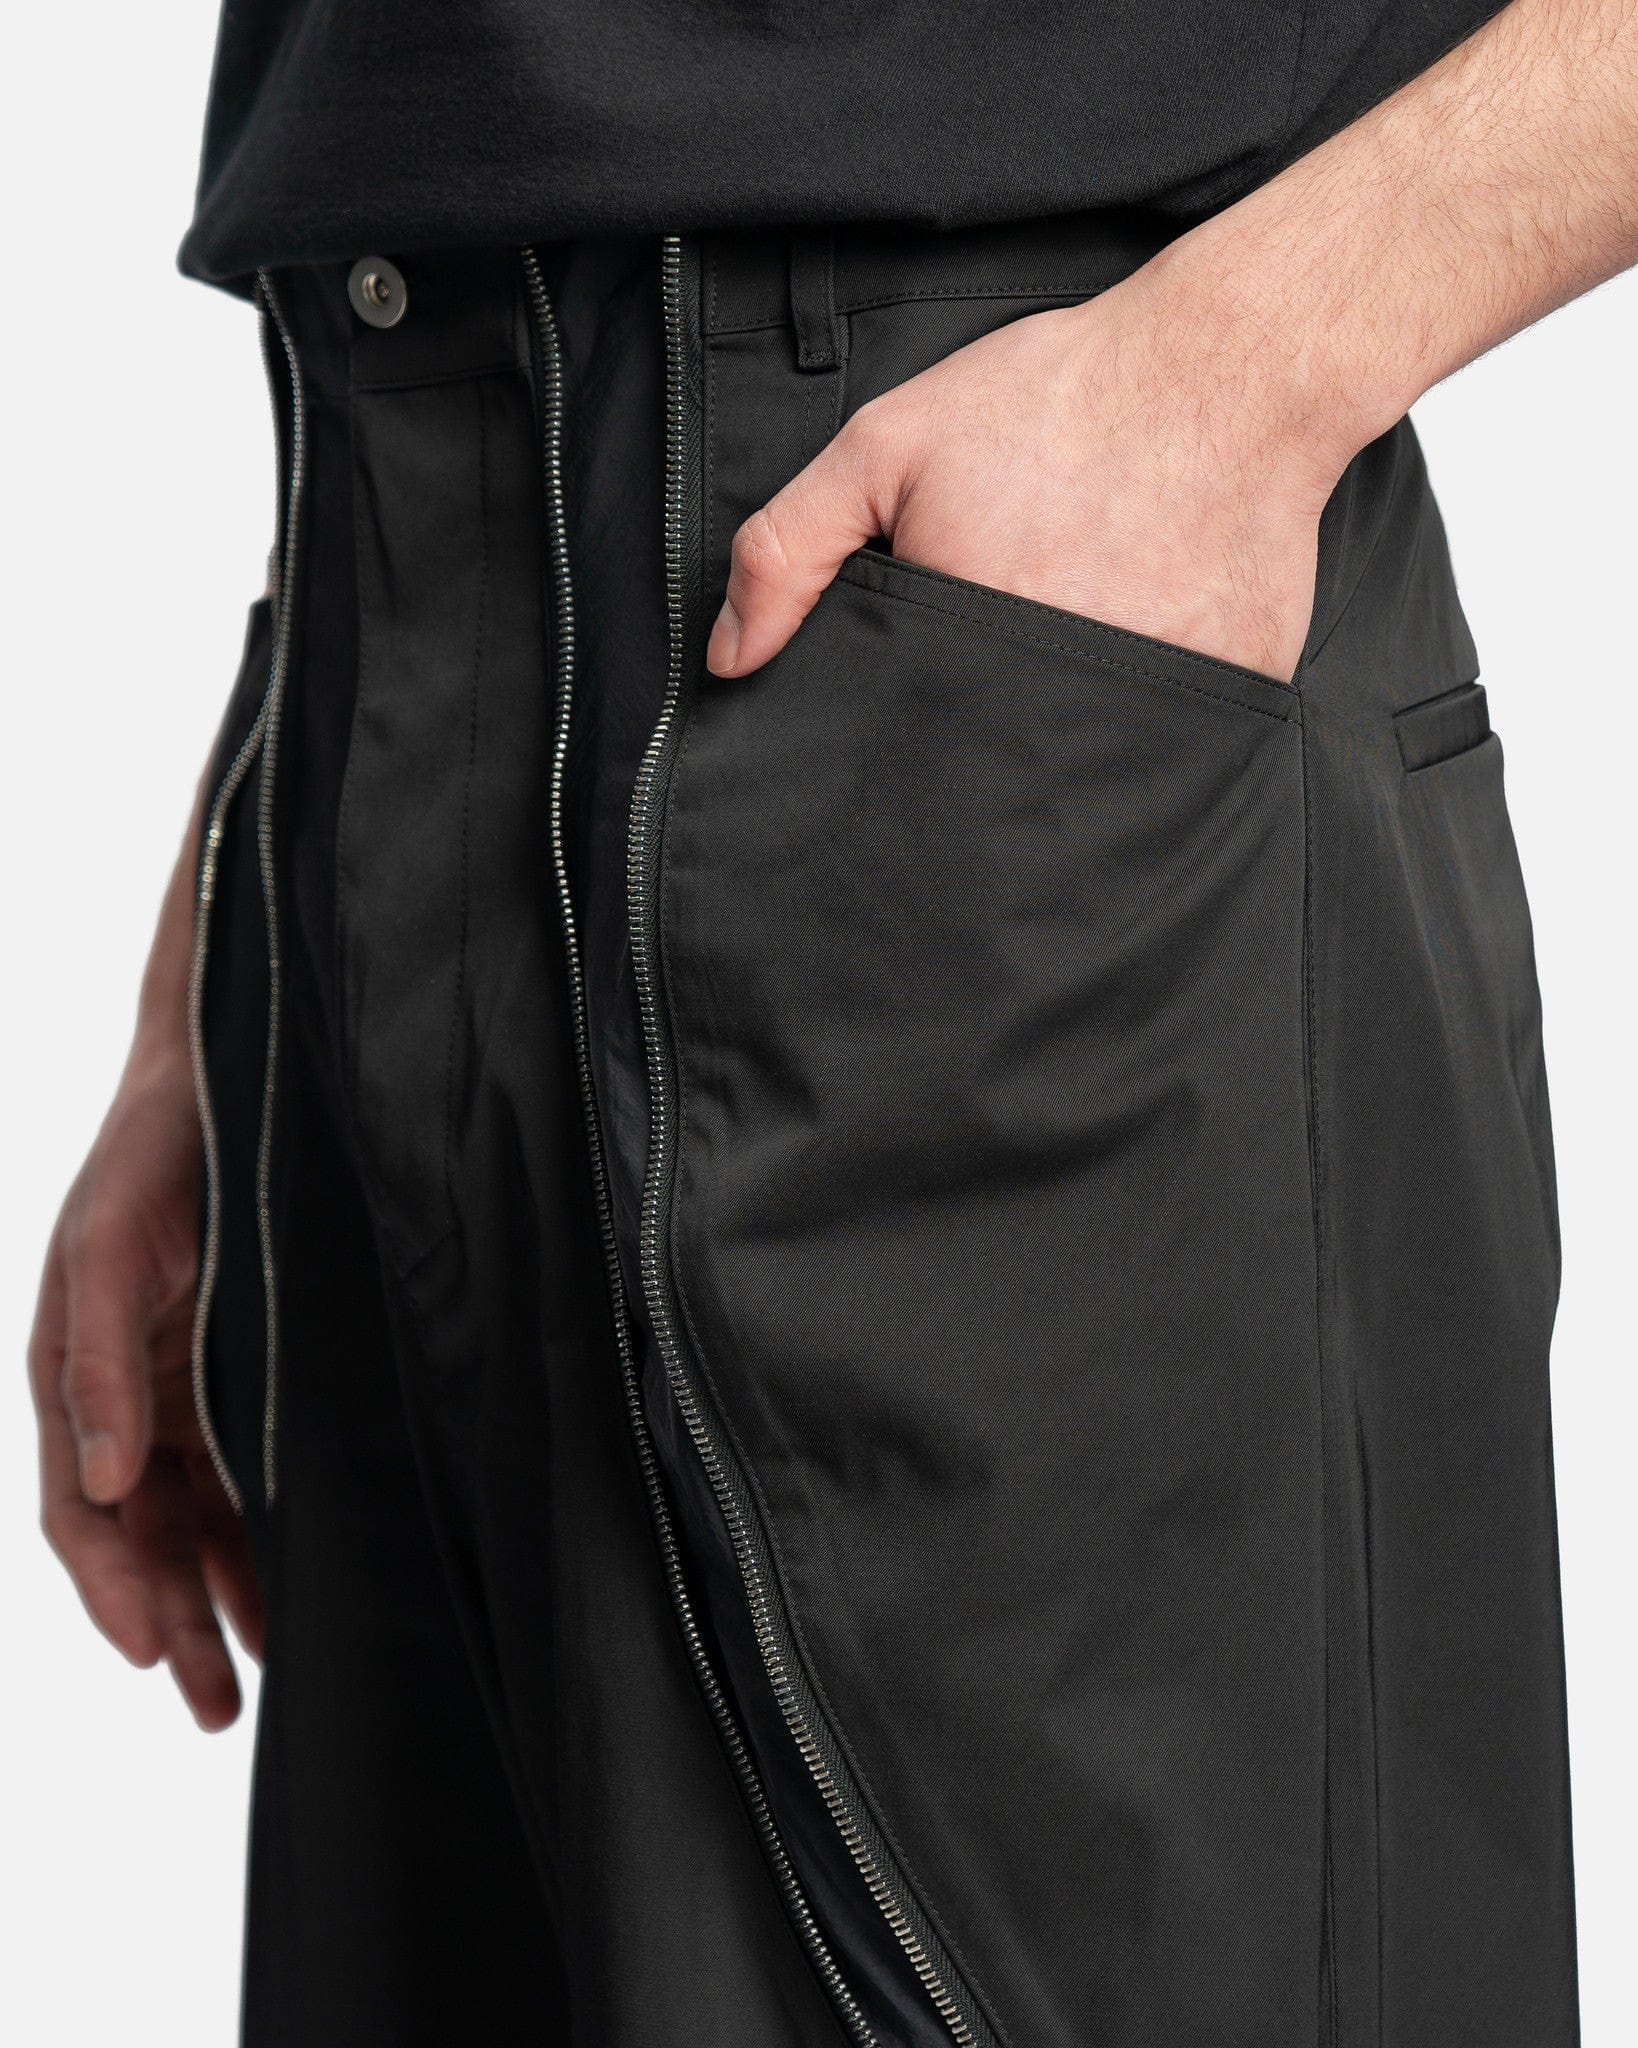 FFFPOSTALSERVICE Zip Trouser パンツ 32-